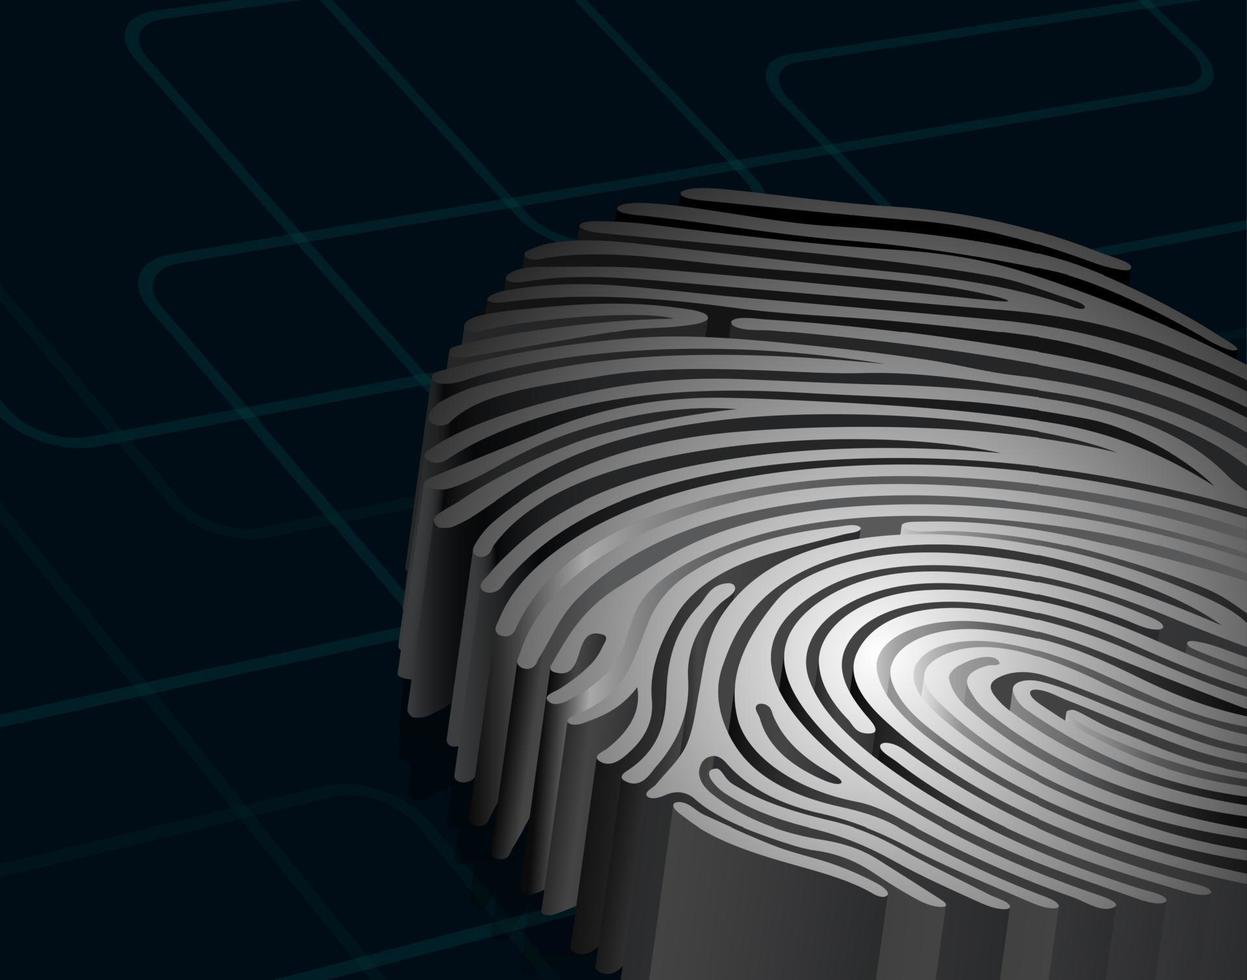 dimensionellt fingeravtryck, stående på mörkblå bakgrund, vektor 3d-illustration